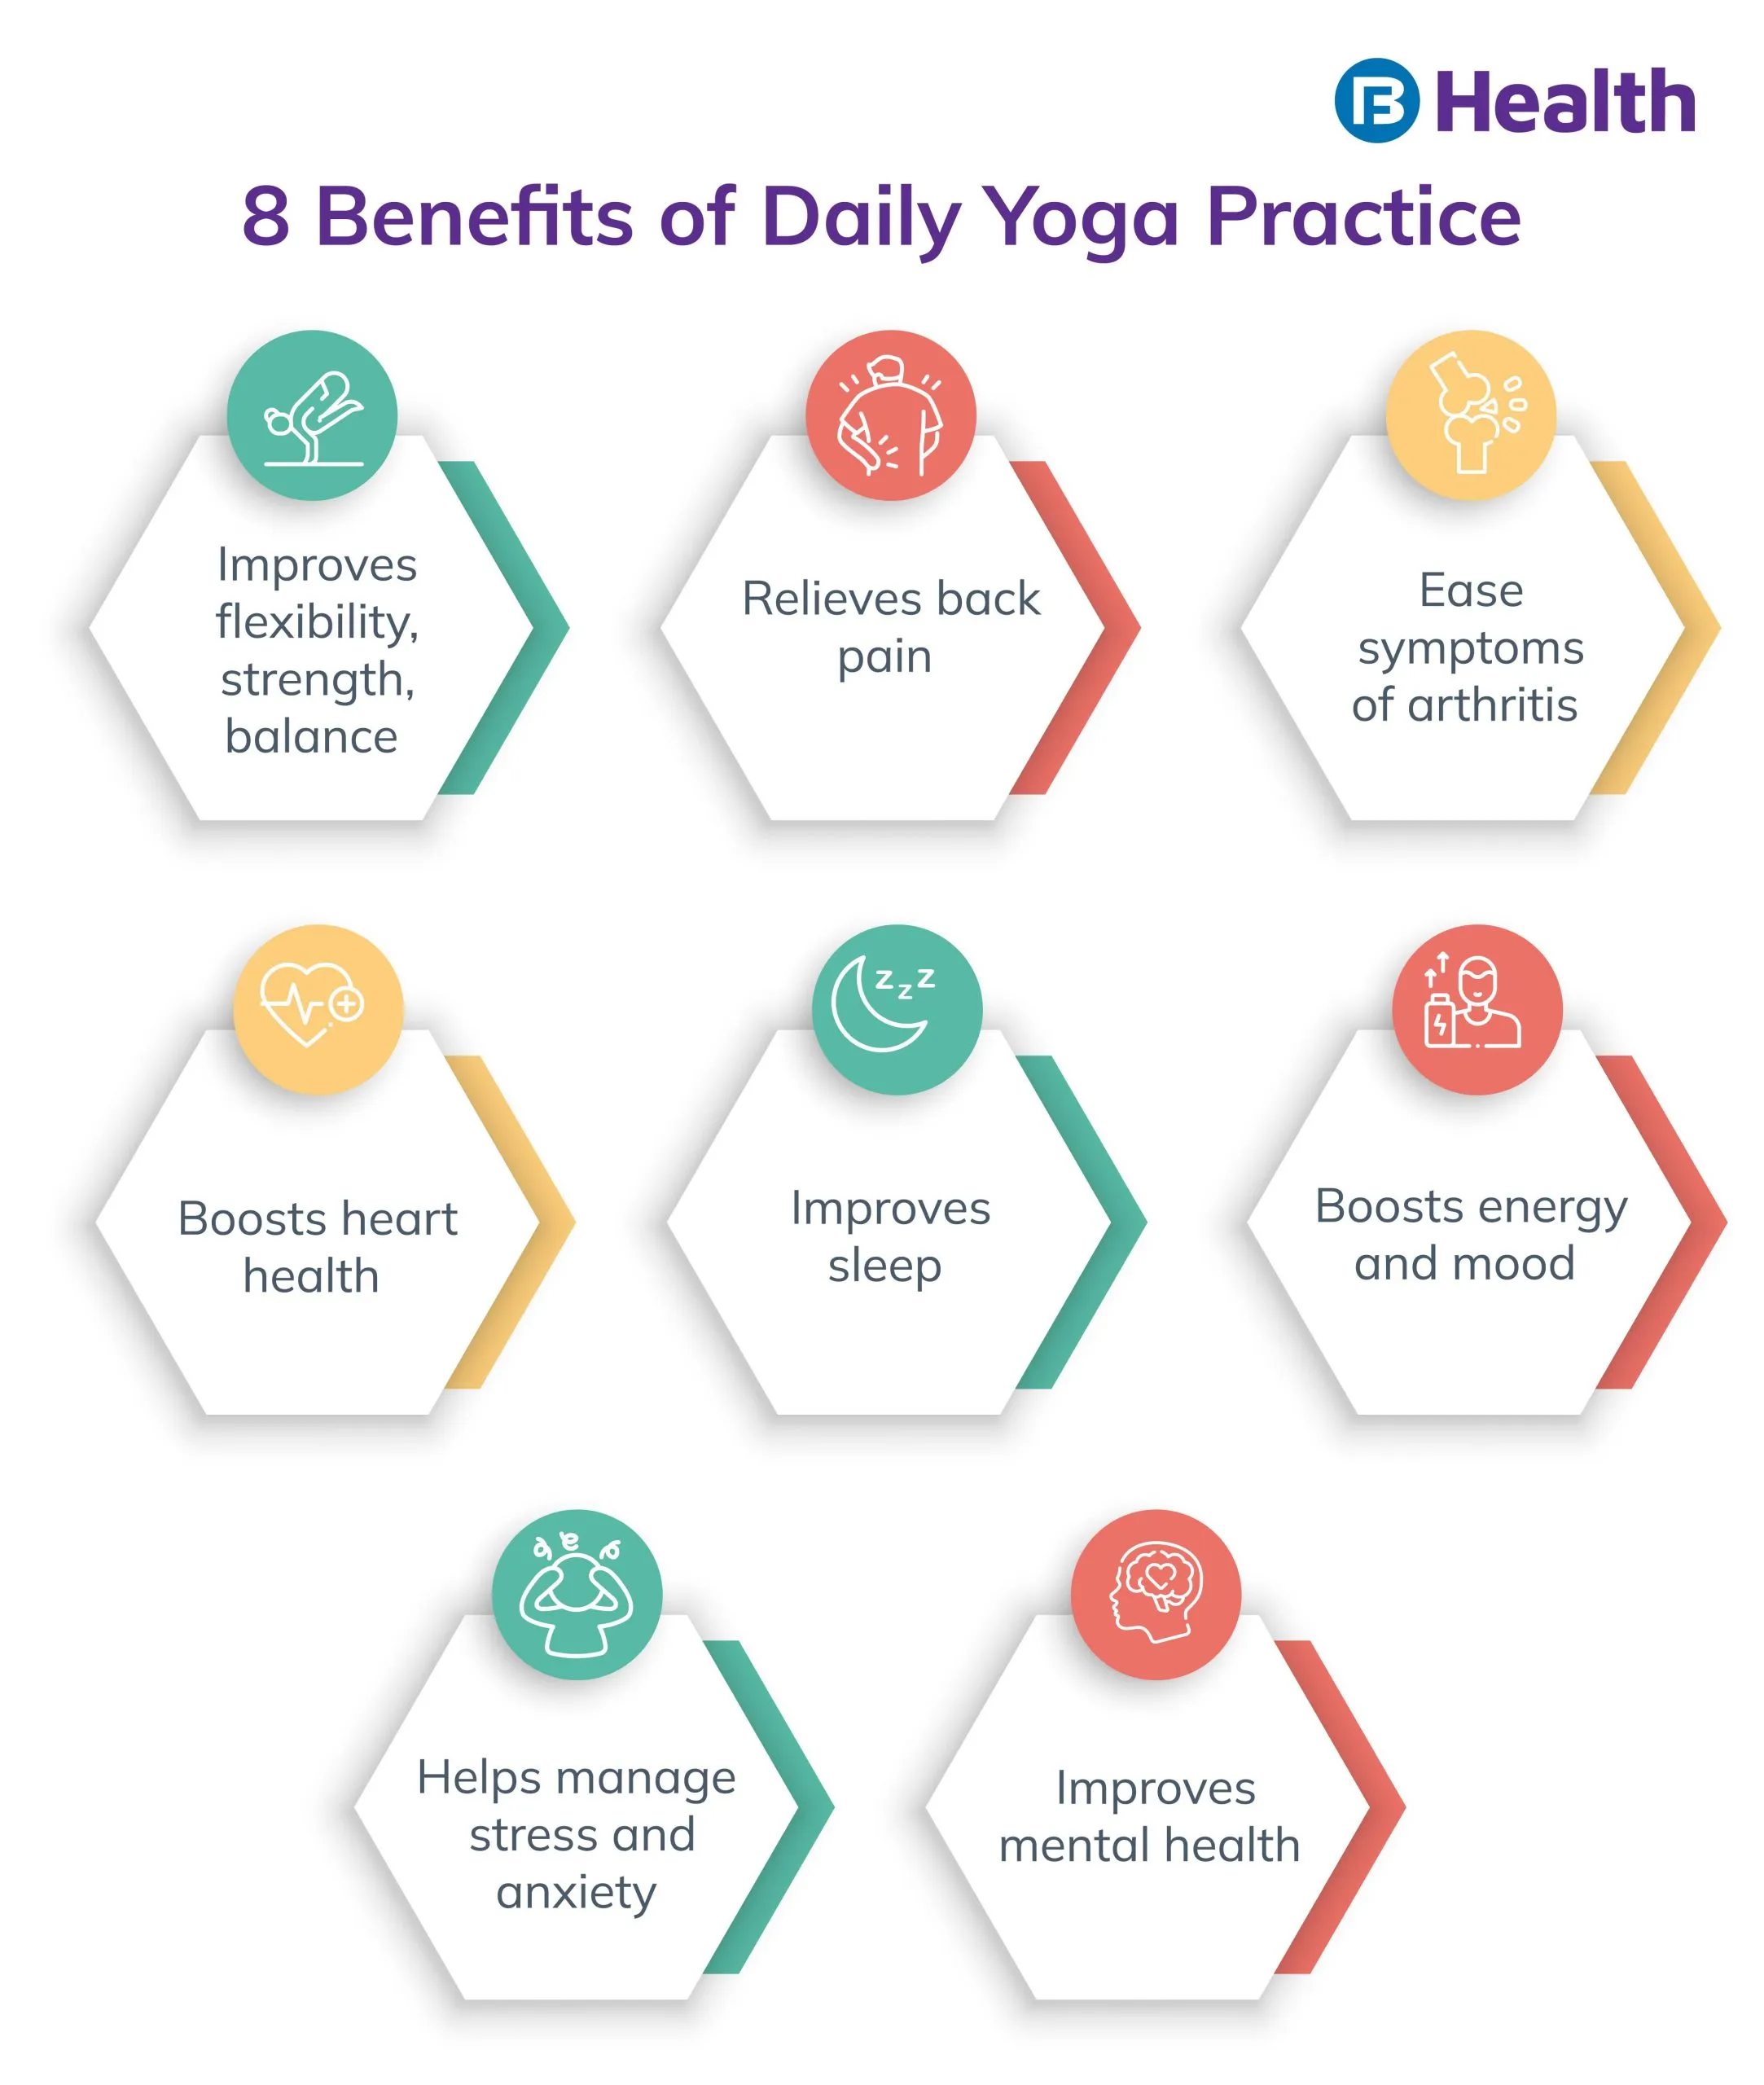 Daily Yoga Practice benefits